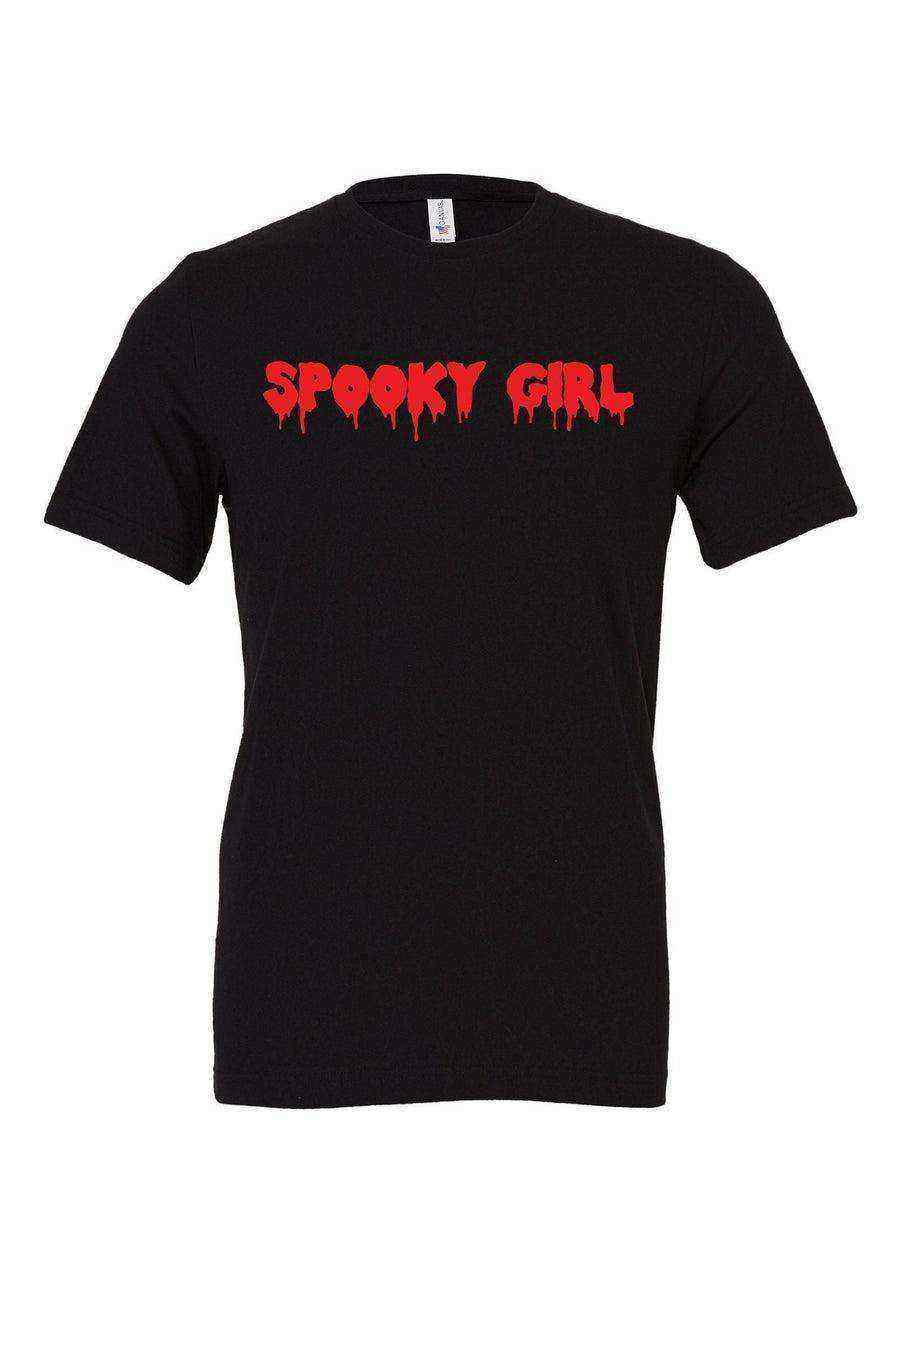 Youth | Spooky Girl Shirt | Halloween Shirt - Dylan's Tees